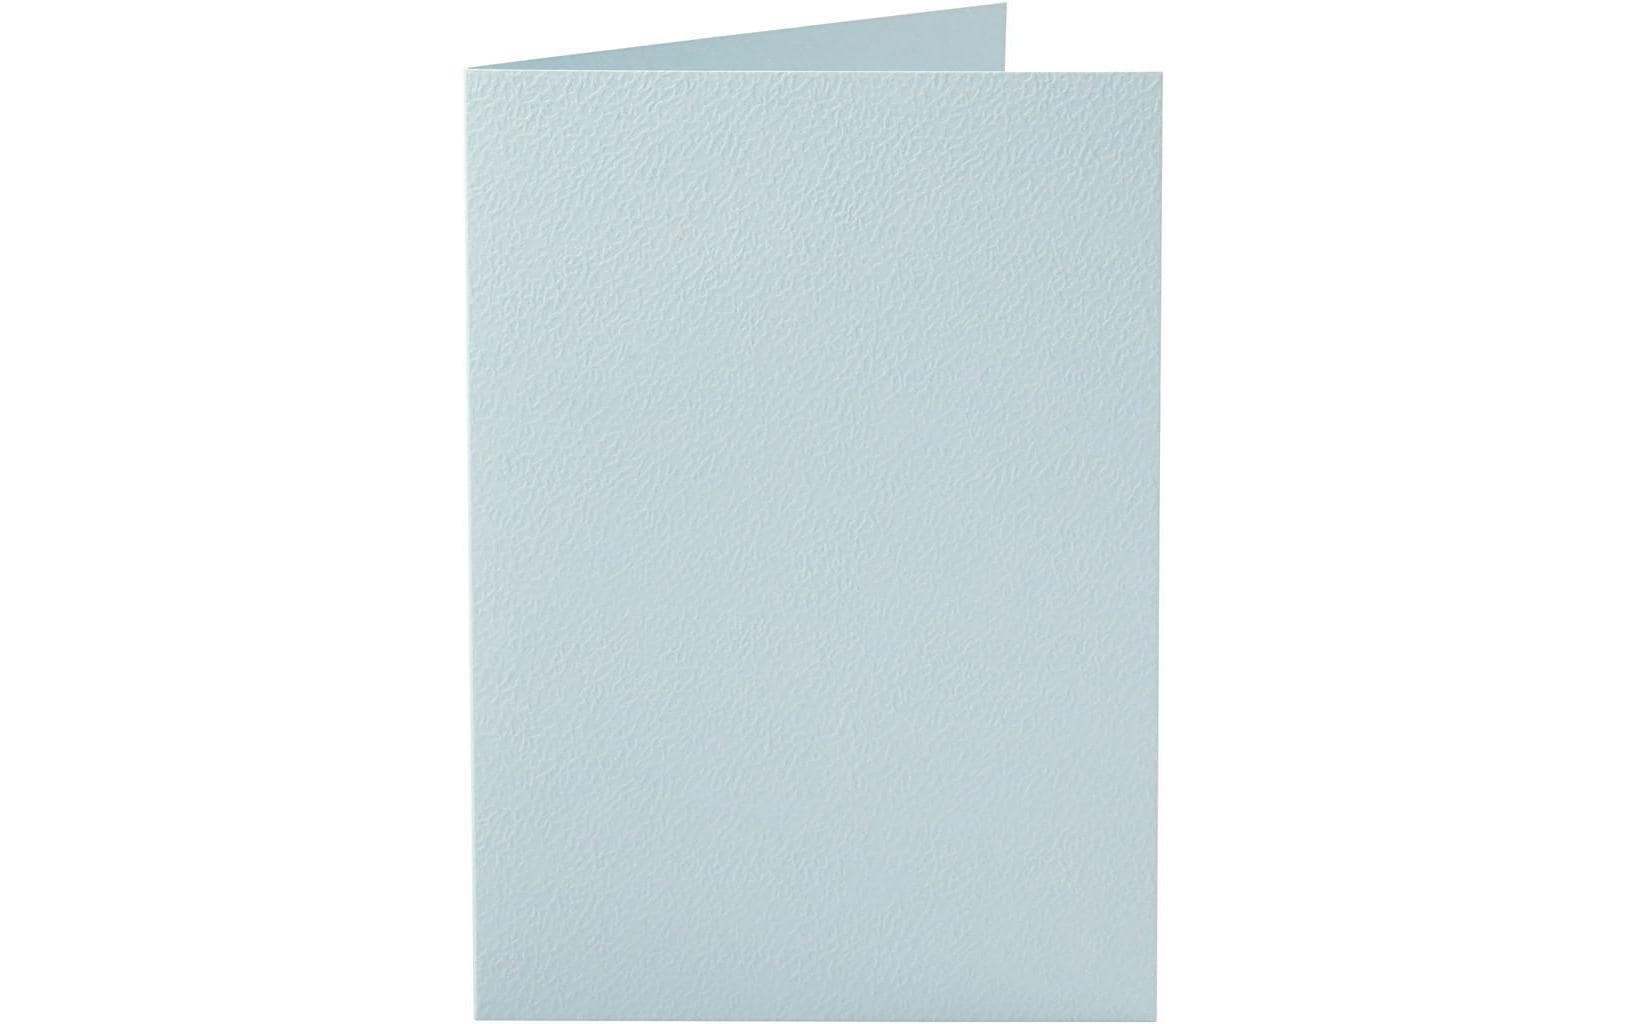 Creativ Company Blankokarte 10.5 x 15 cm ohne Couvert, Hellblau